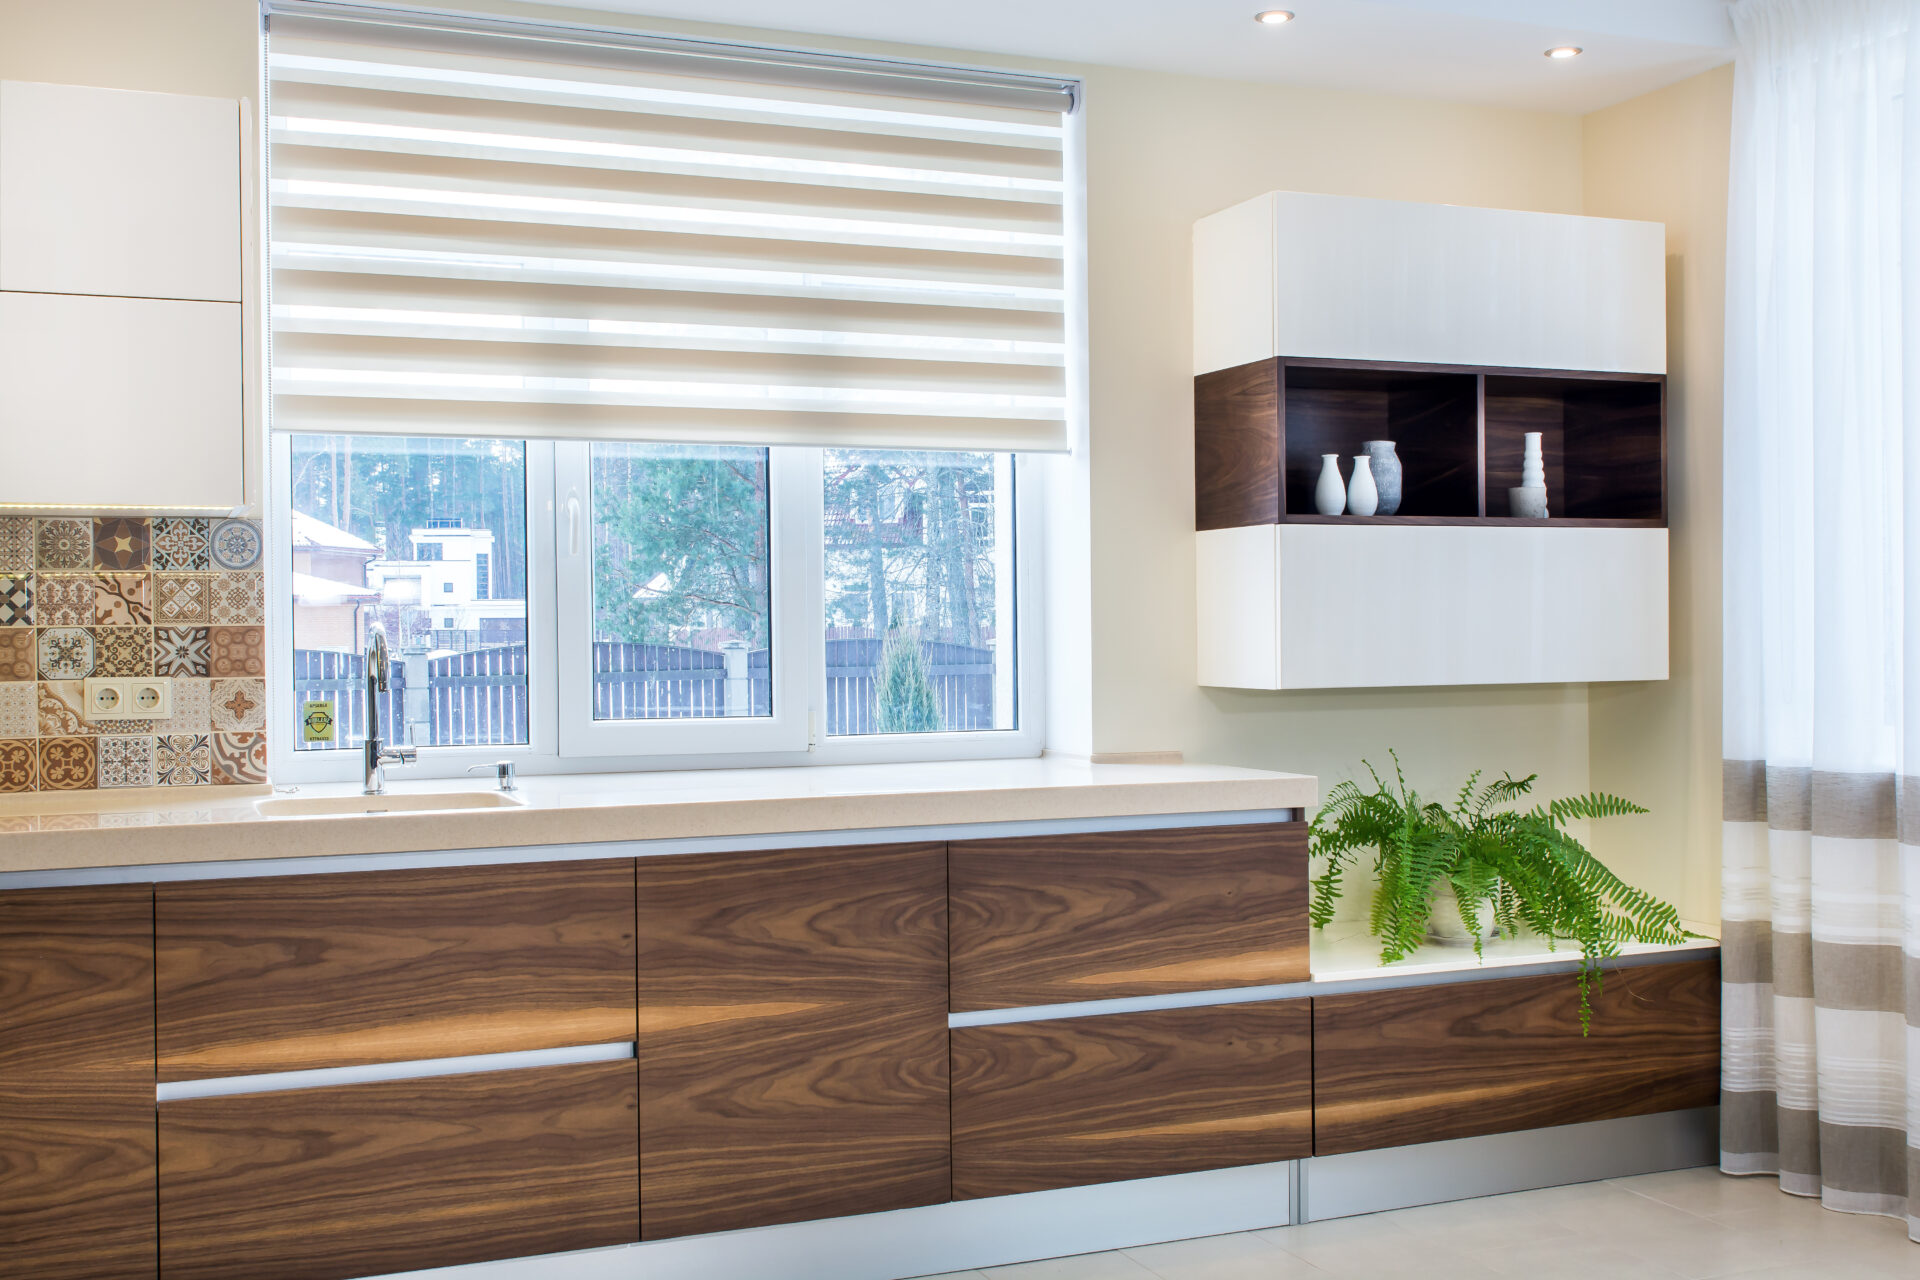 Modern kitchen furniture design in light interior with Somfy blinds. Wholesale Blind Factory